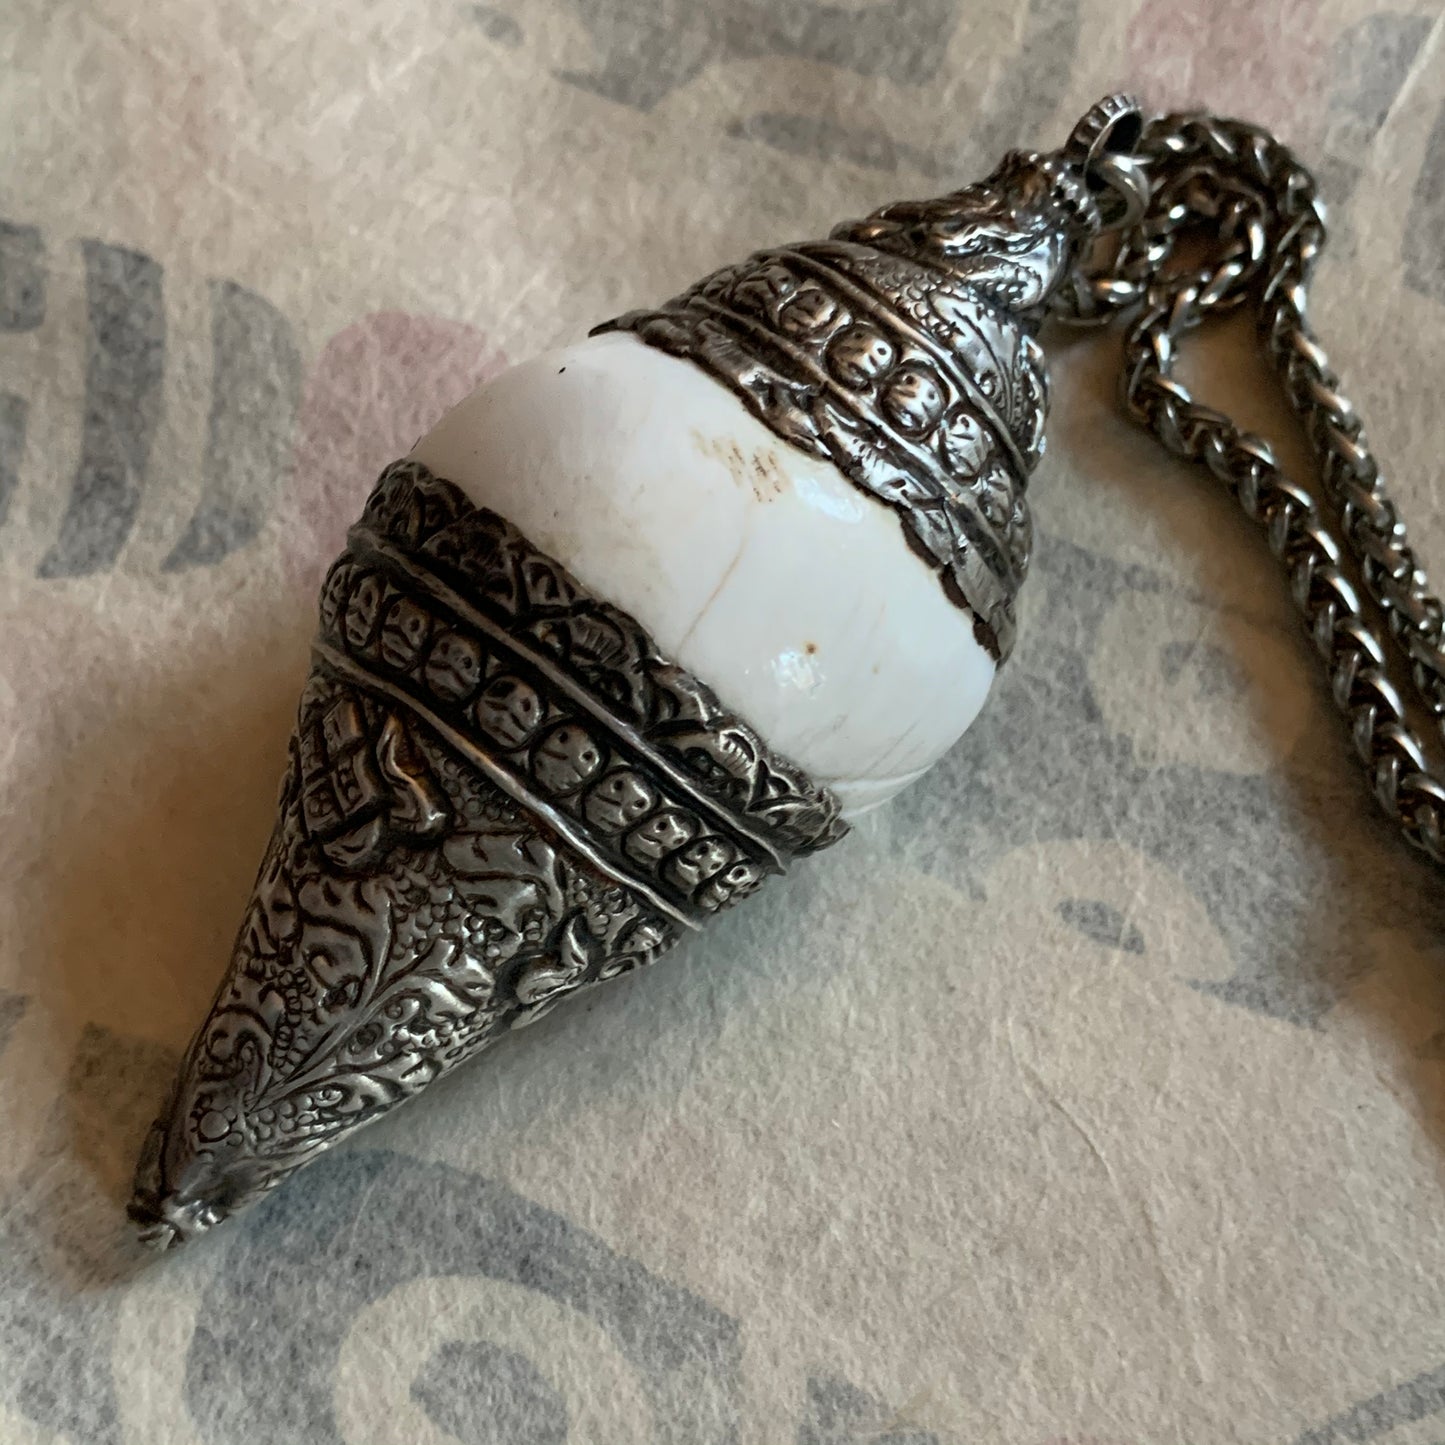 A vintage silver naga conch shell pendant